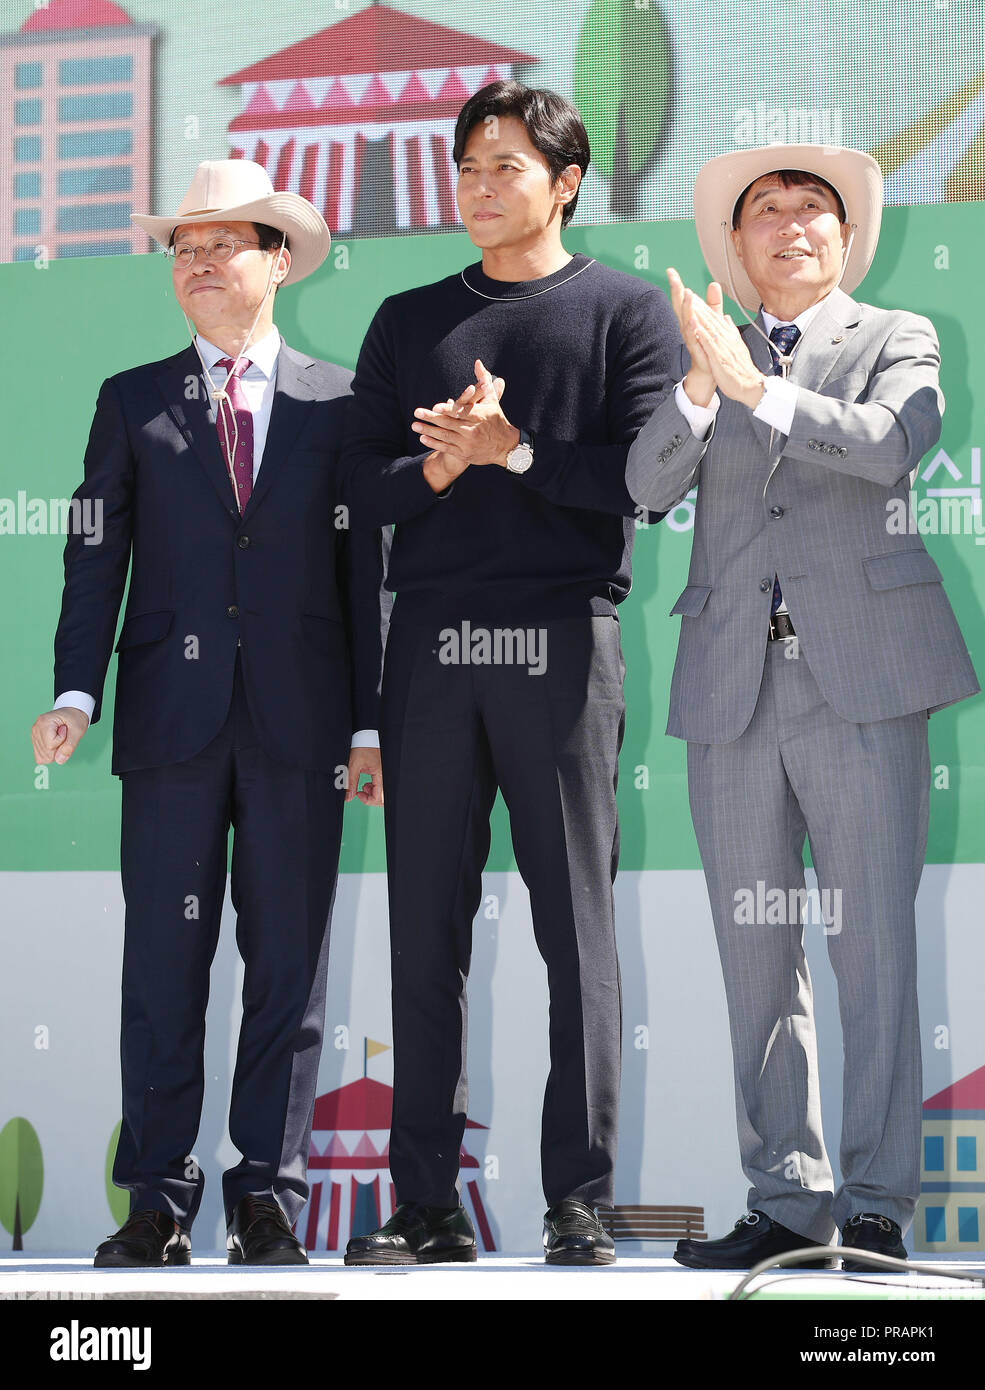 01 Okt, 2018. S. Korean actor Jang Dong-gun Koreanische Schauspieler Jang Dong-gun (C) nimmt an dem 5. handon Tag in Seoul Land in Gwacheon, Gyeonggi Provinz, südlich von Seoul, on Sept. 29, 2018. Credit: Yonhap/Newcom/Alamy leben Nachrichten Stockfoto